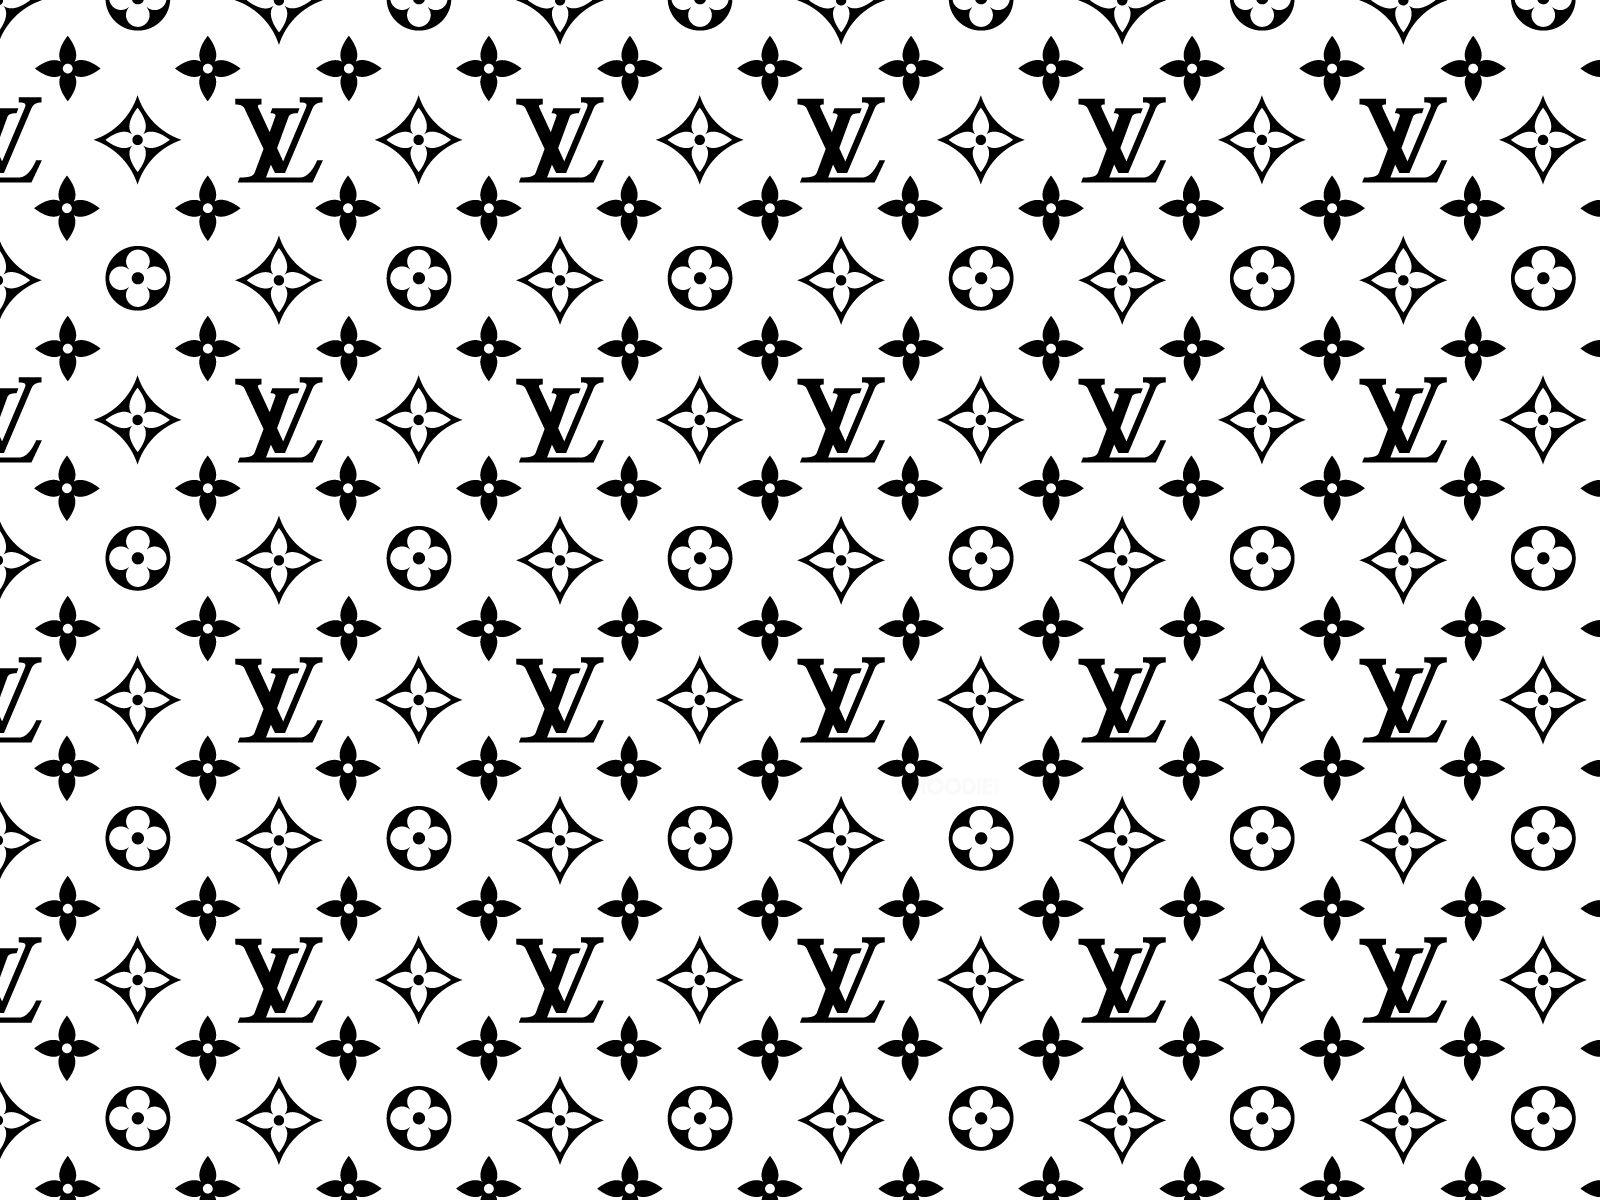 Louis Vuitton Wallpaper 19 X 1200. Louis vuitton pattern, Louis vuitton background, Louis vuitton iphone wallpaper